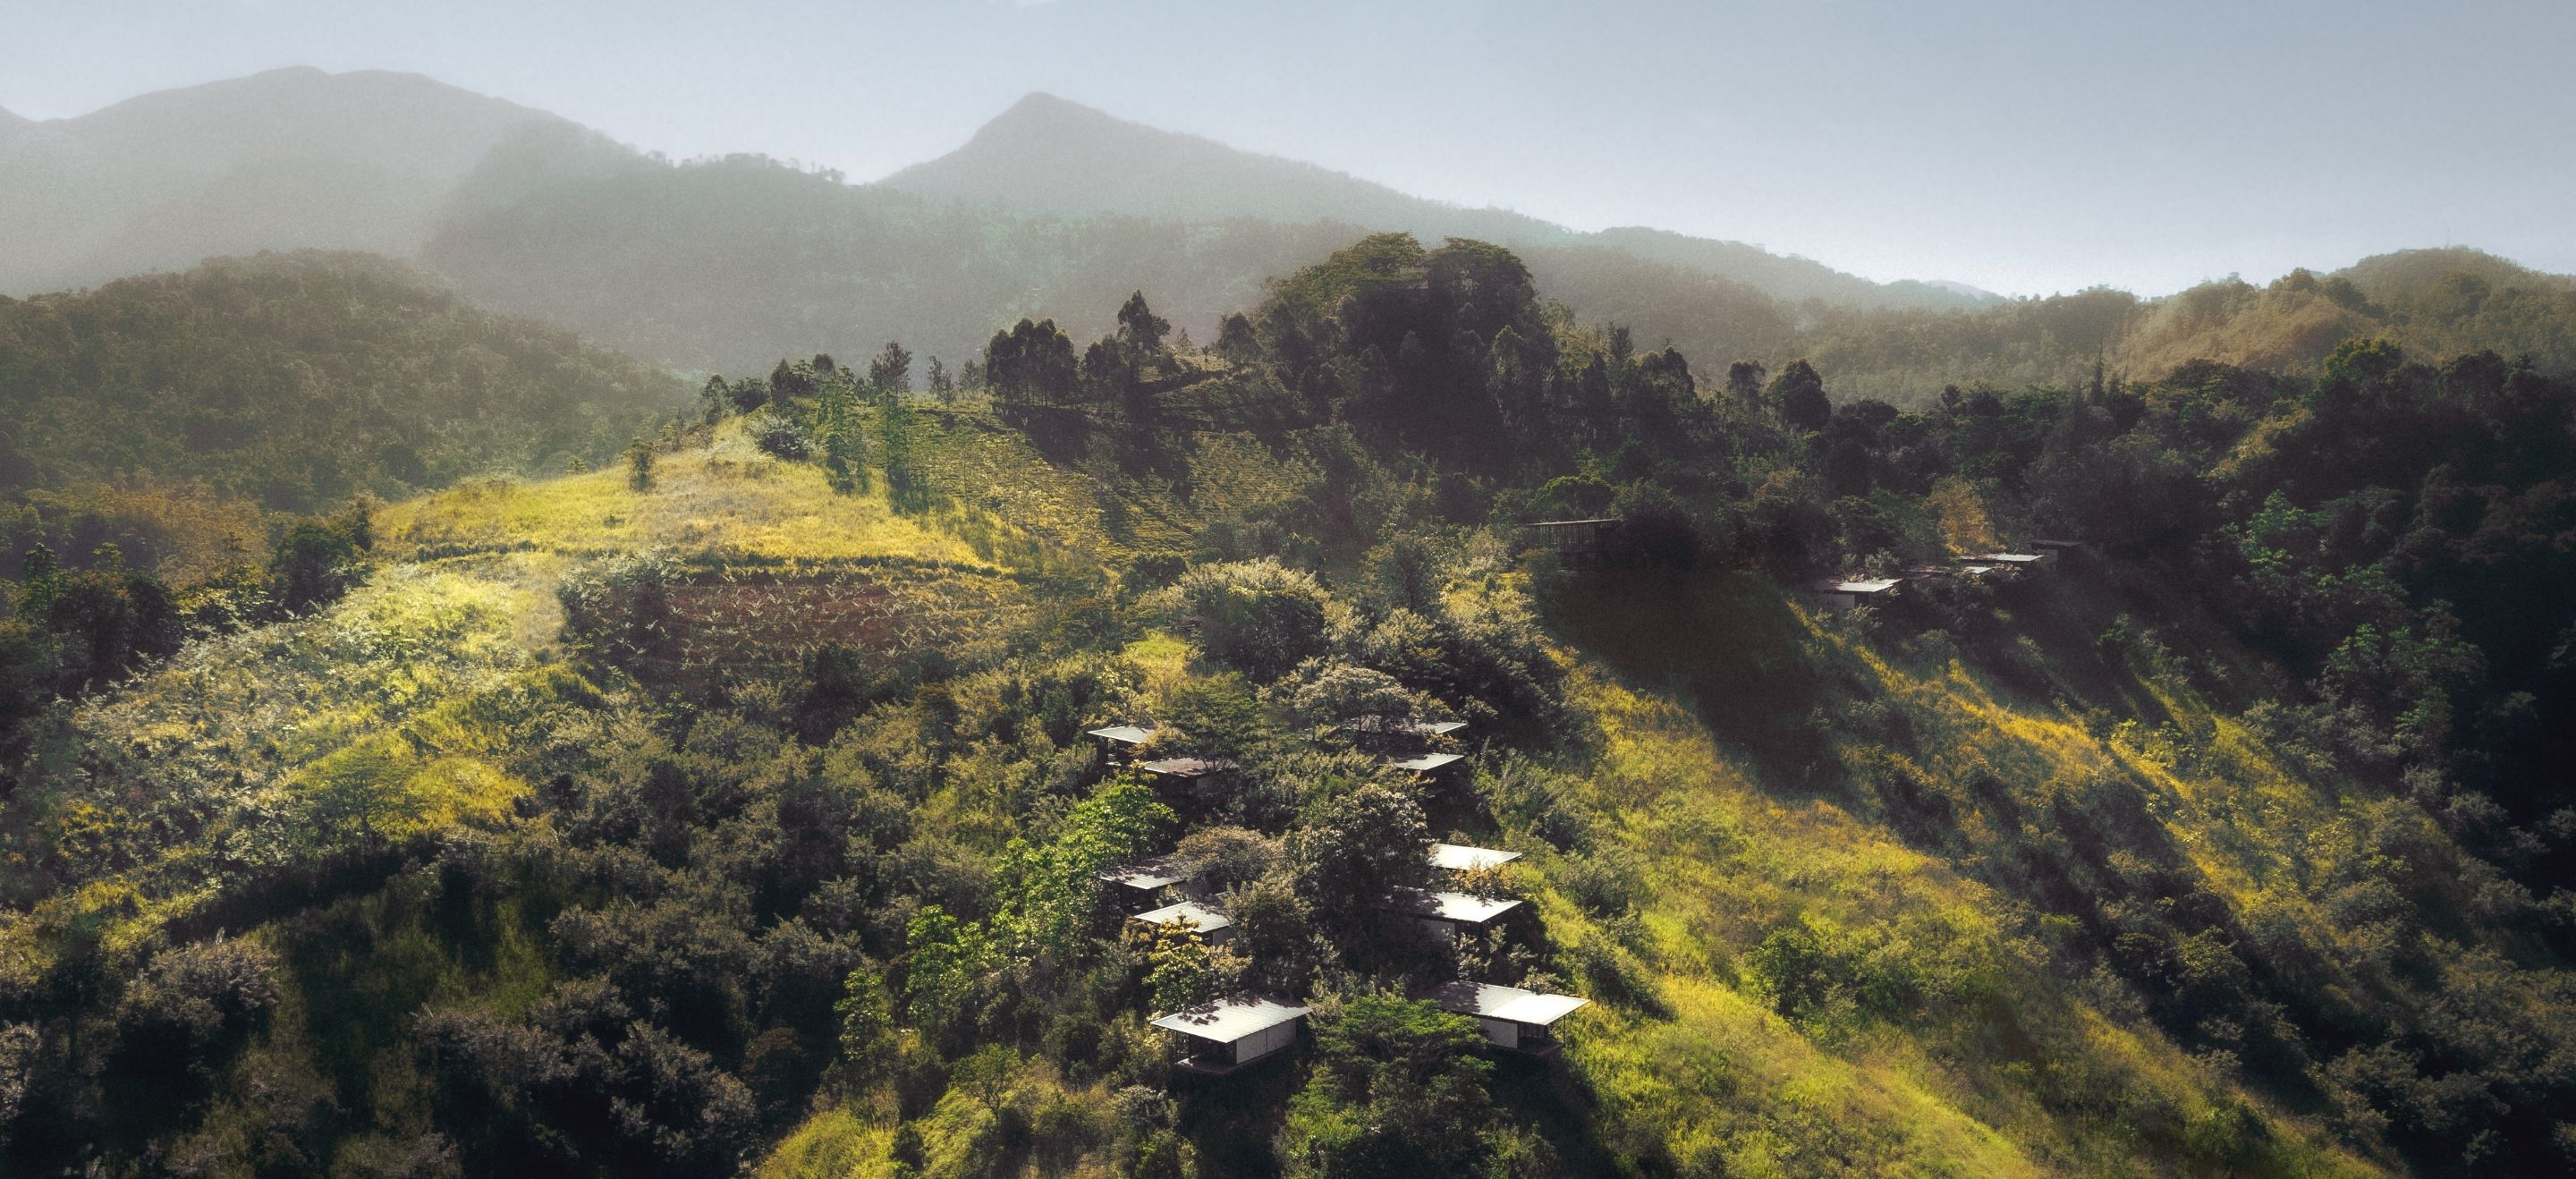 Santani nestles among the rolling, greenery-clad hills of Central Sri Lanka